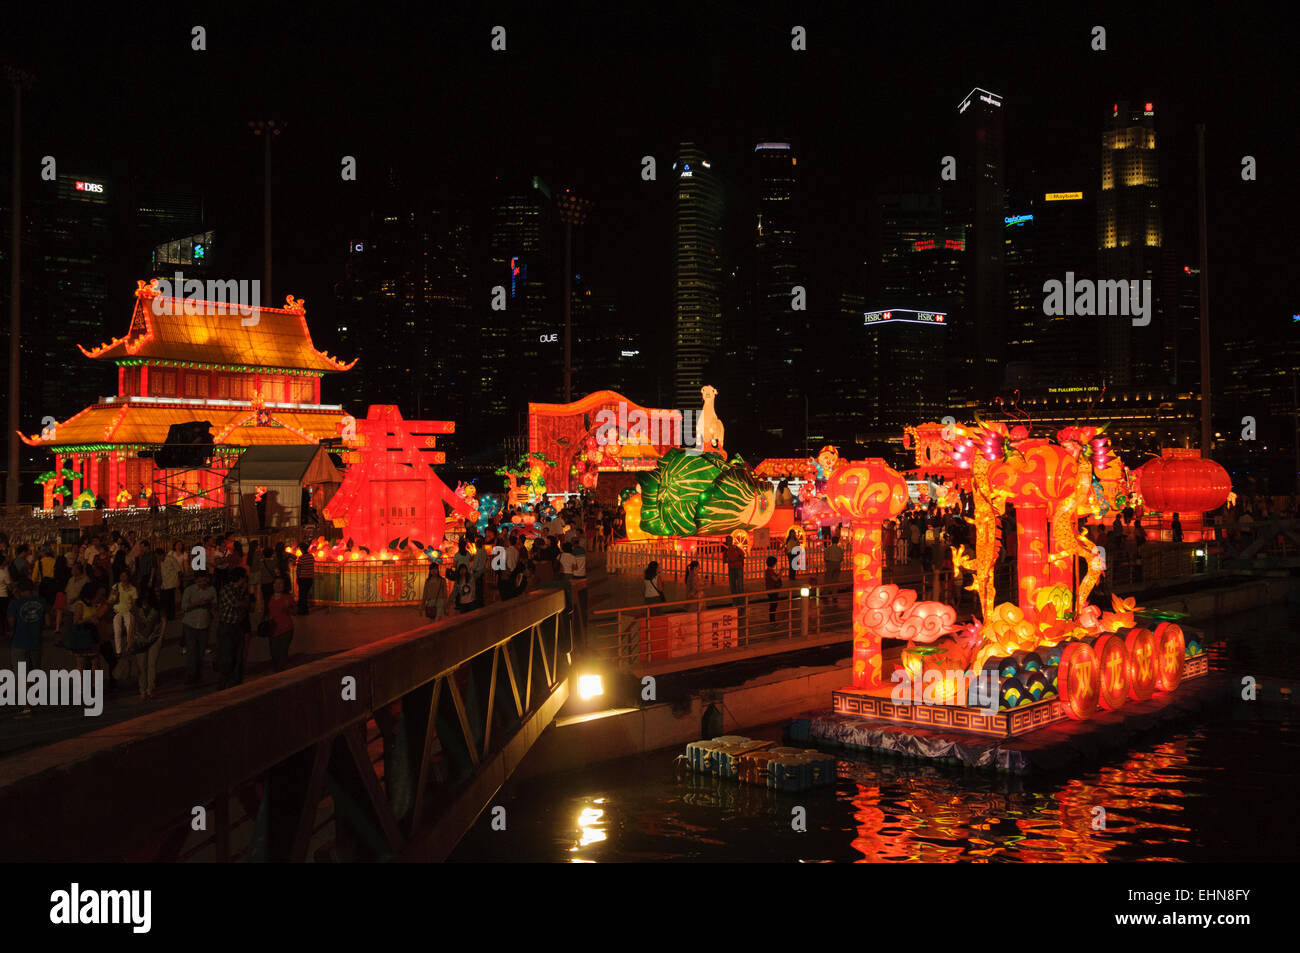 Year of the Horse Chinese new year lantern festival. Singapore Stock Photo